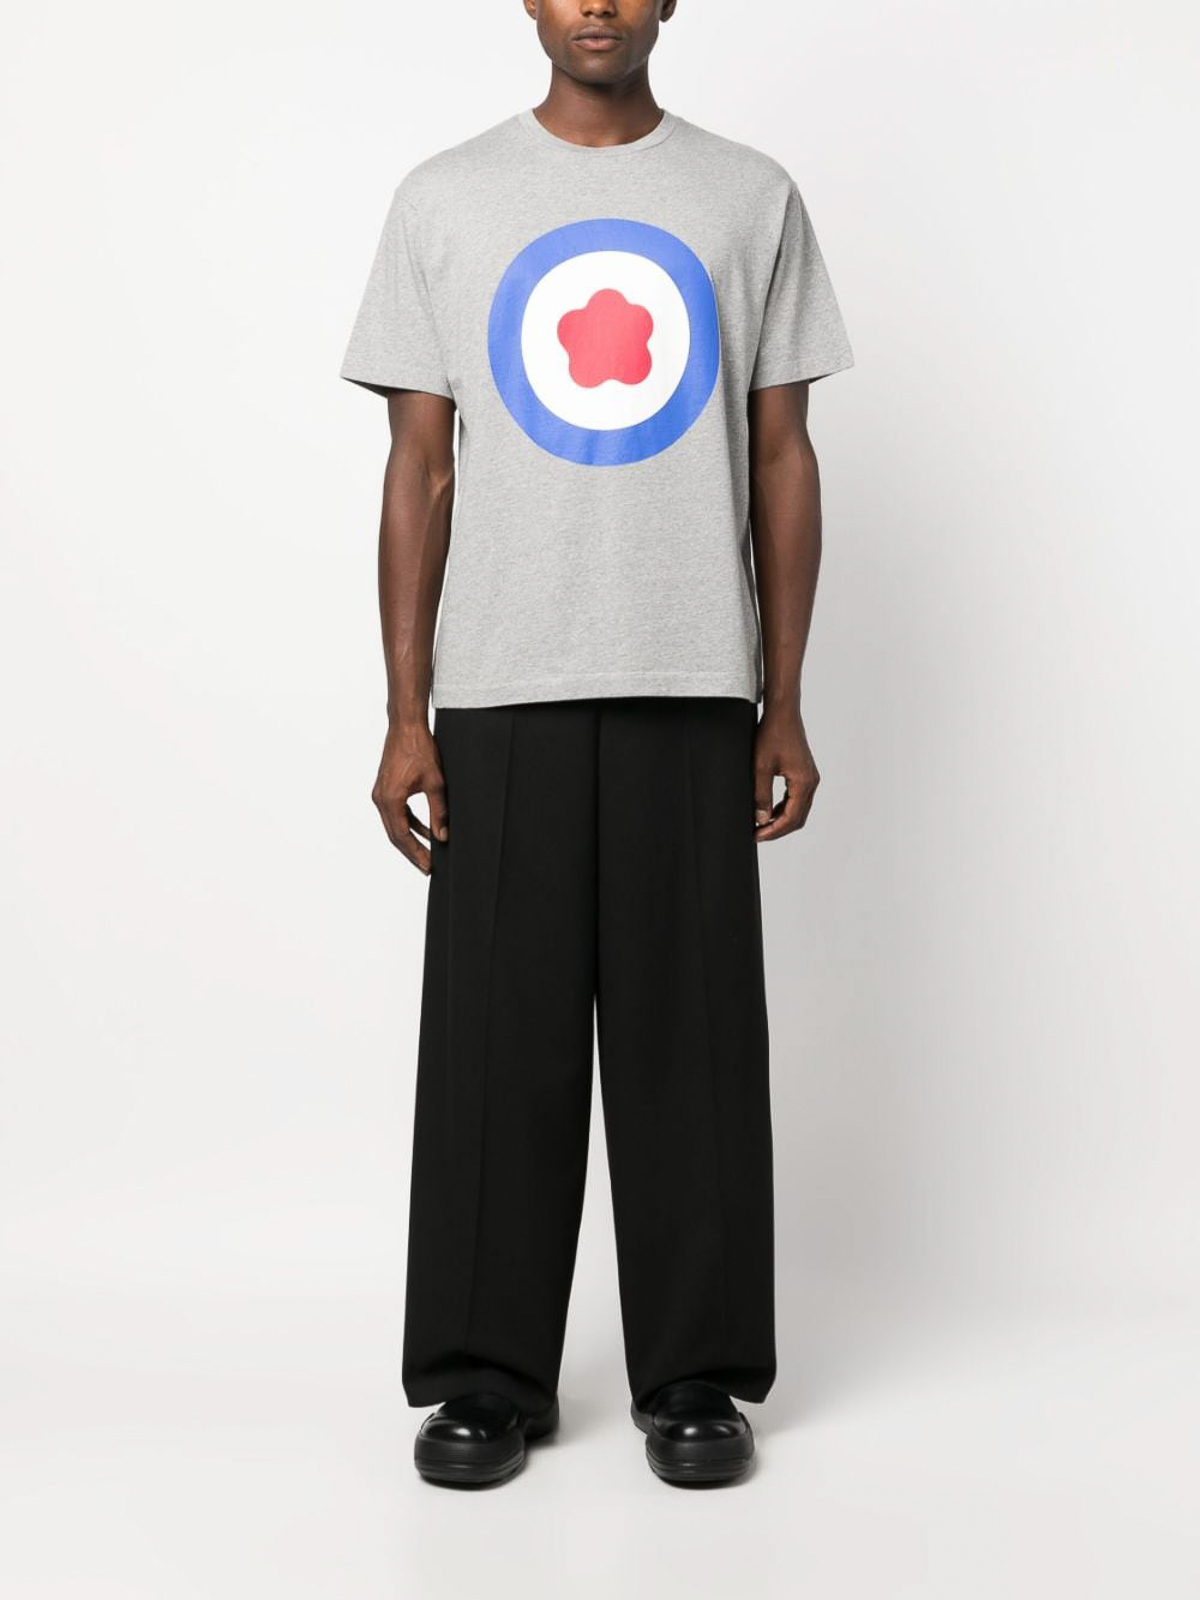 KENZO Target Oversize Cotton T-shirt in Gray for Men